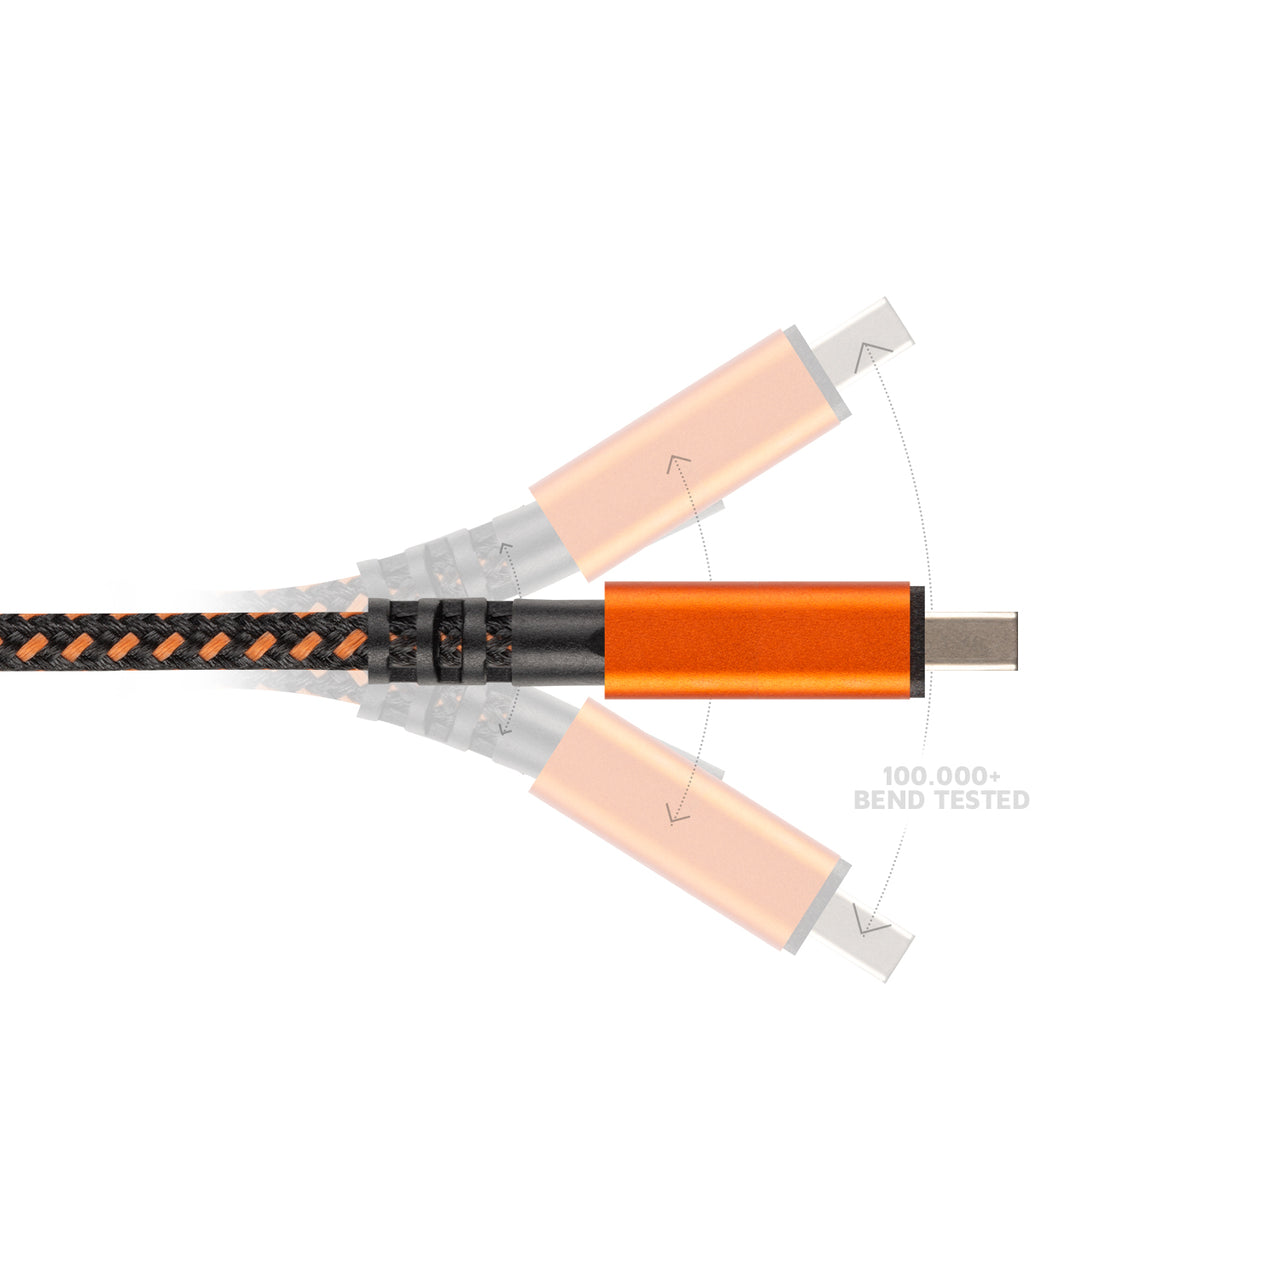 Xtorm Xtreme USB naar Lightning kabel 12W - 1.5 meter